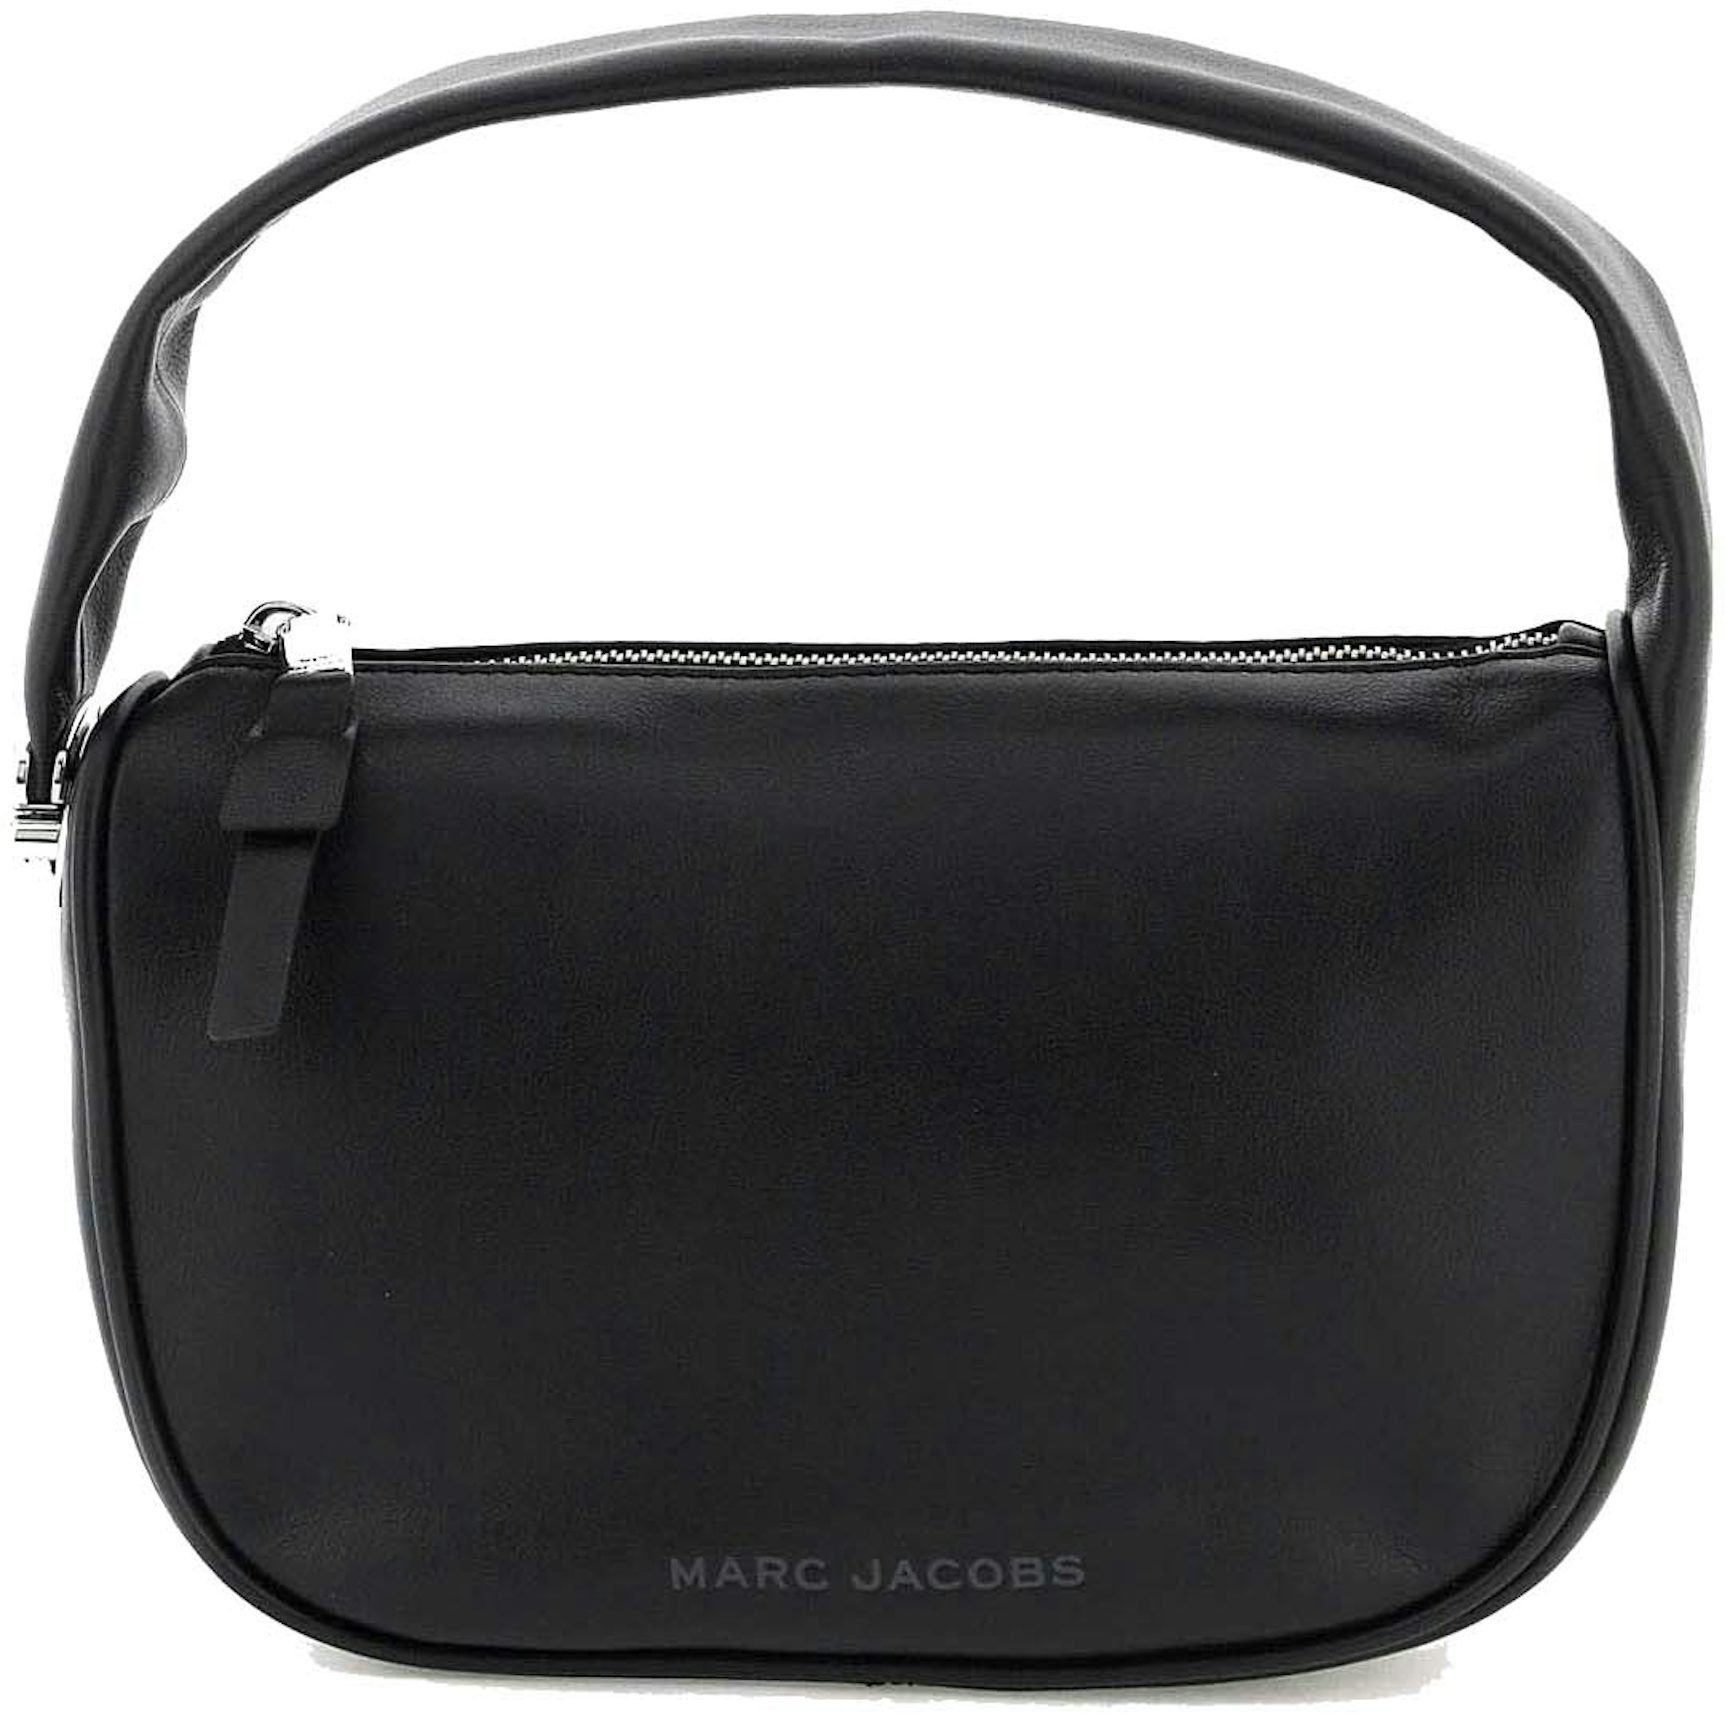 Marc Jacobs Black & Silver Pushlock Leather Small Satchel Bag Purse & Dust  Bag